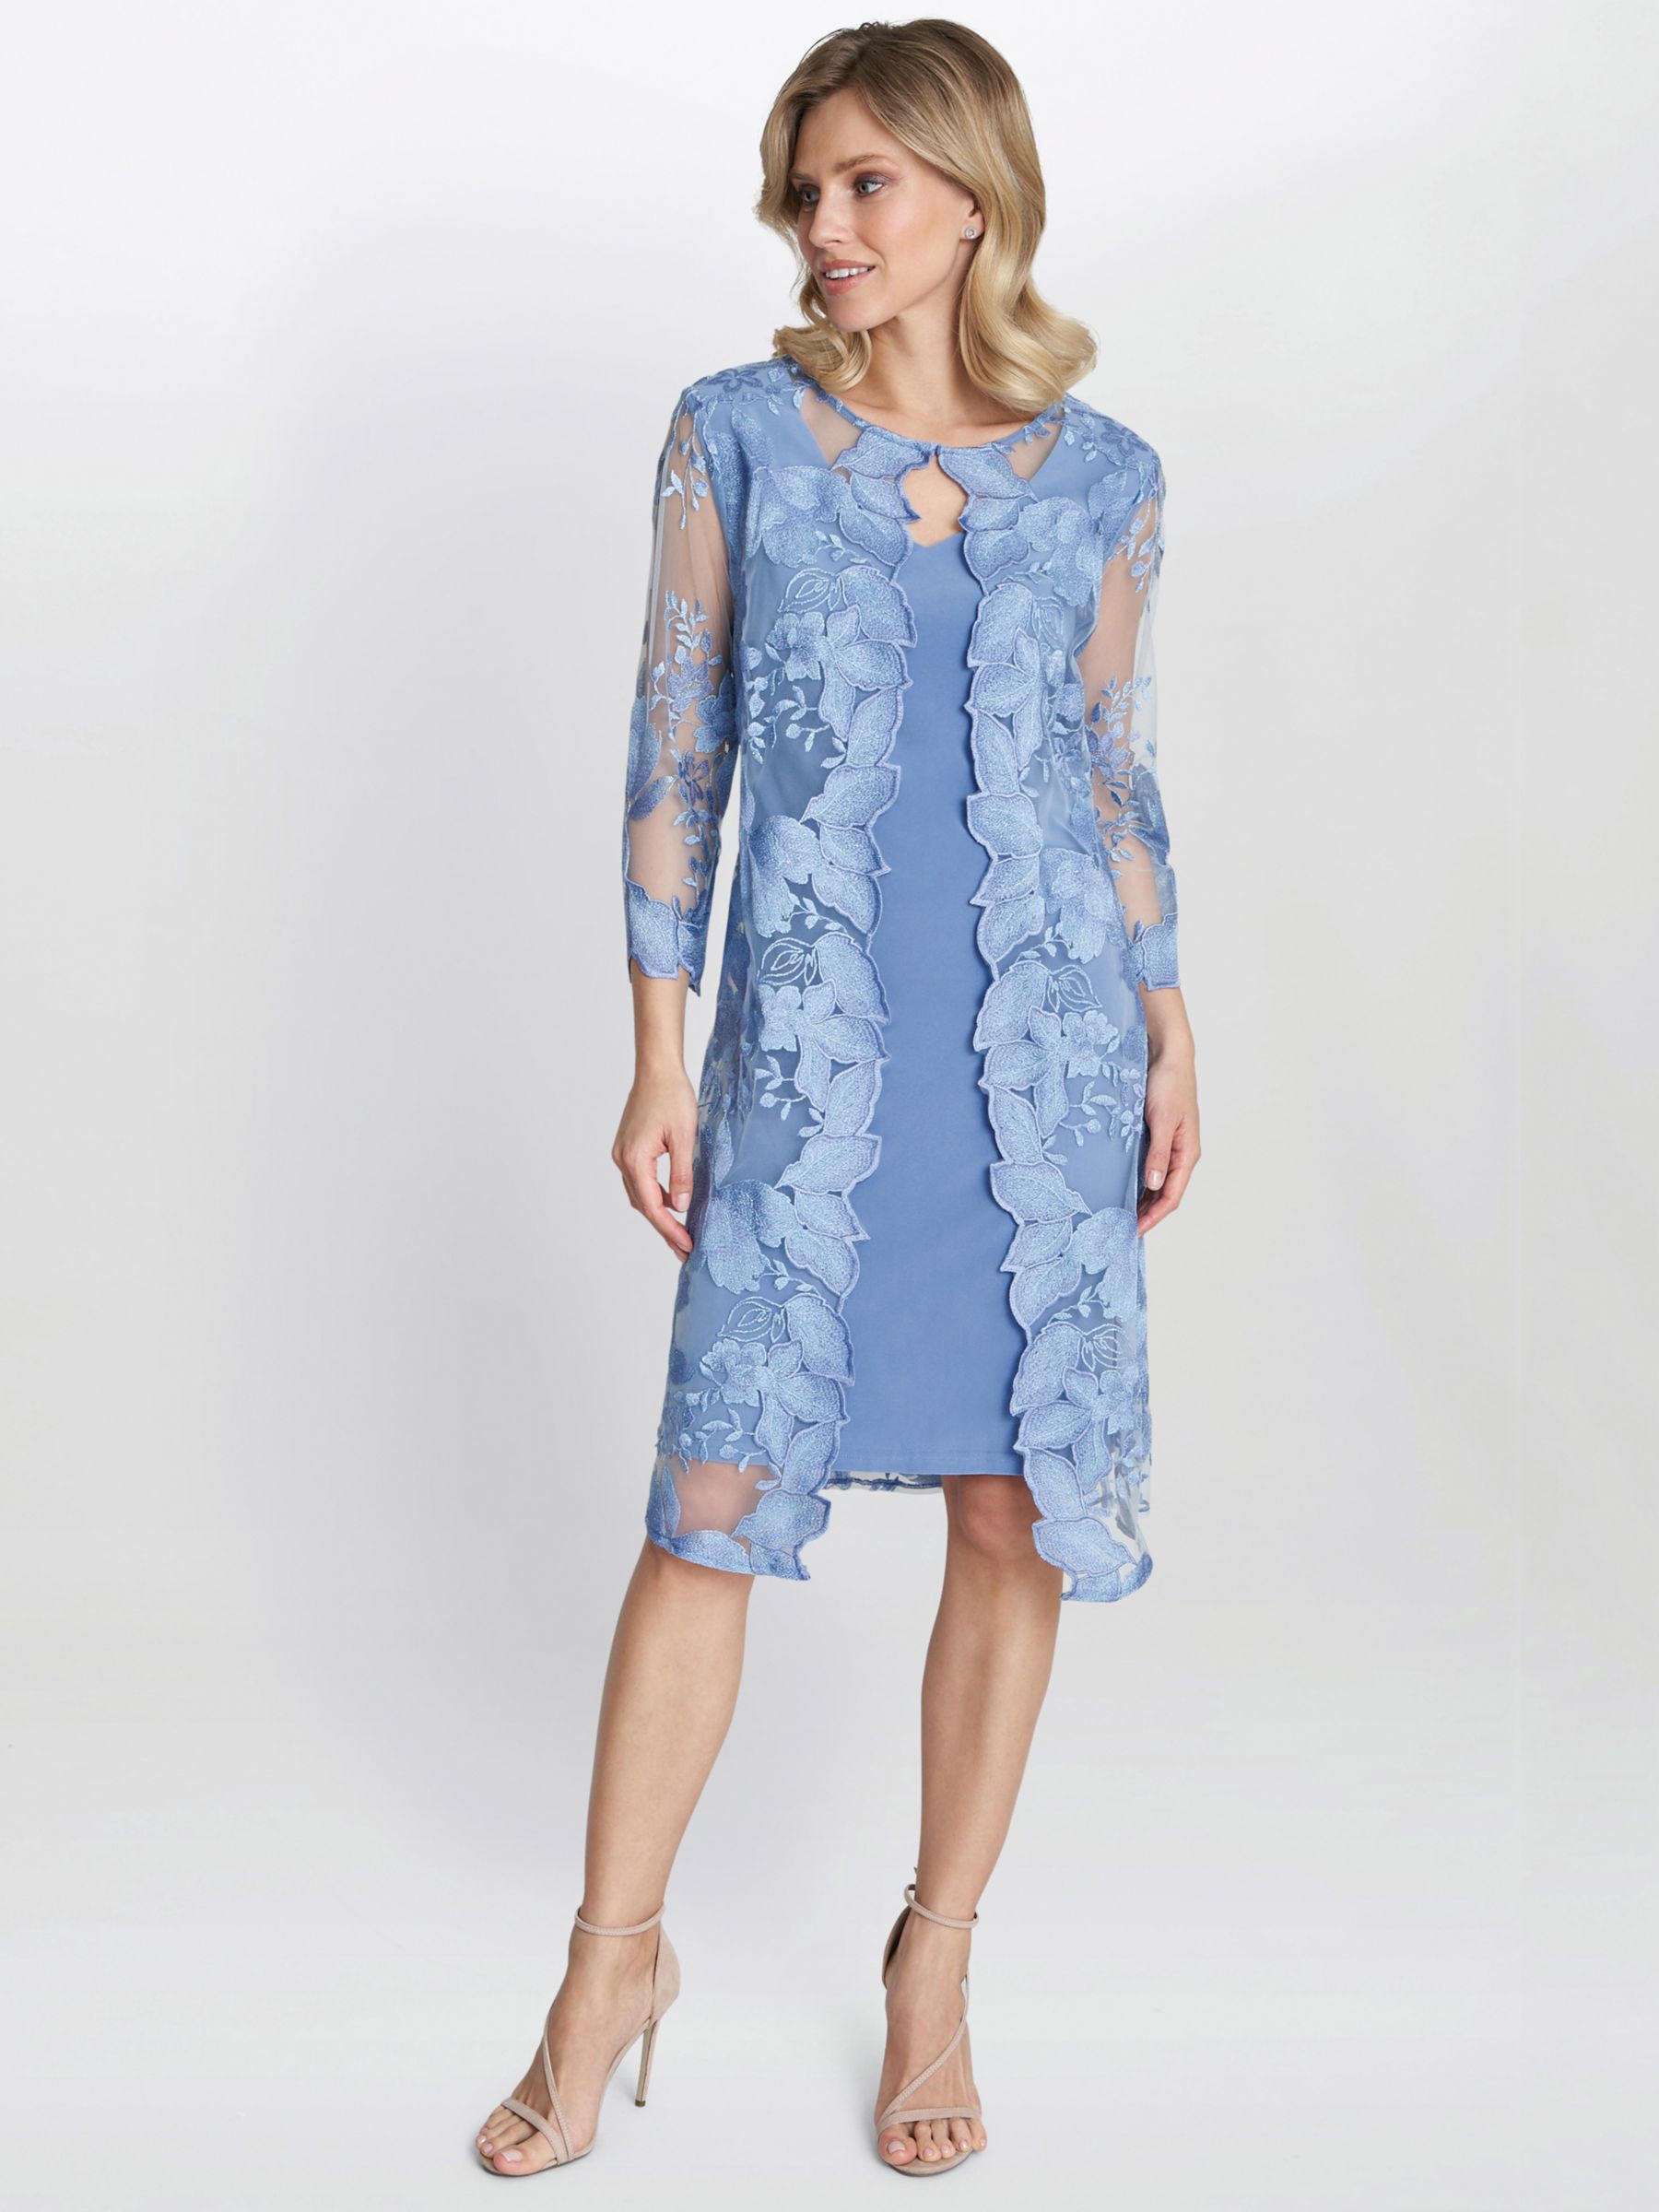 Gina Bacconi Savoy Embroidered Dress, Hydrangea at John Lewis & Partners